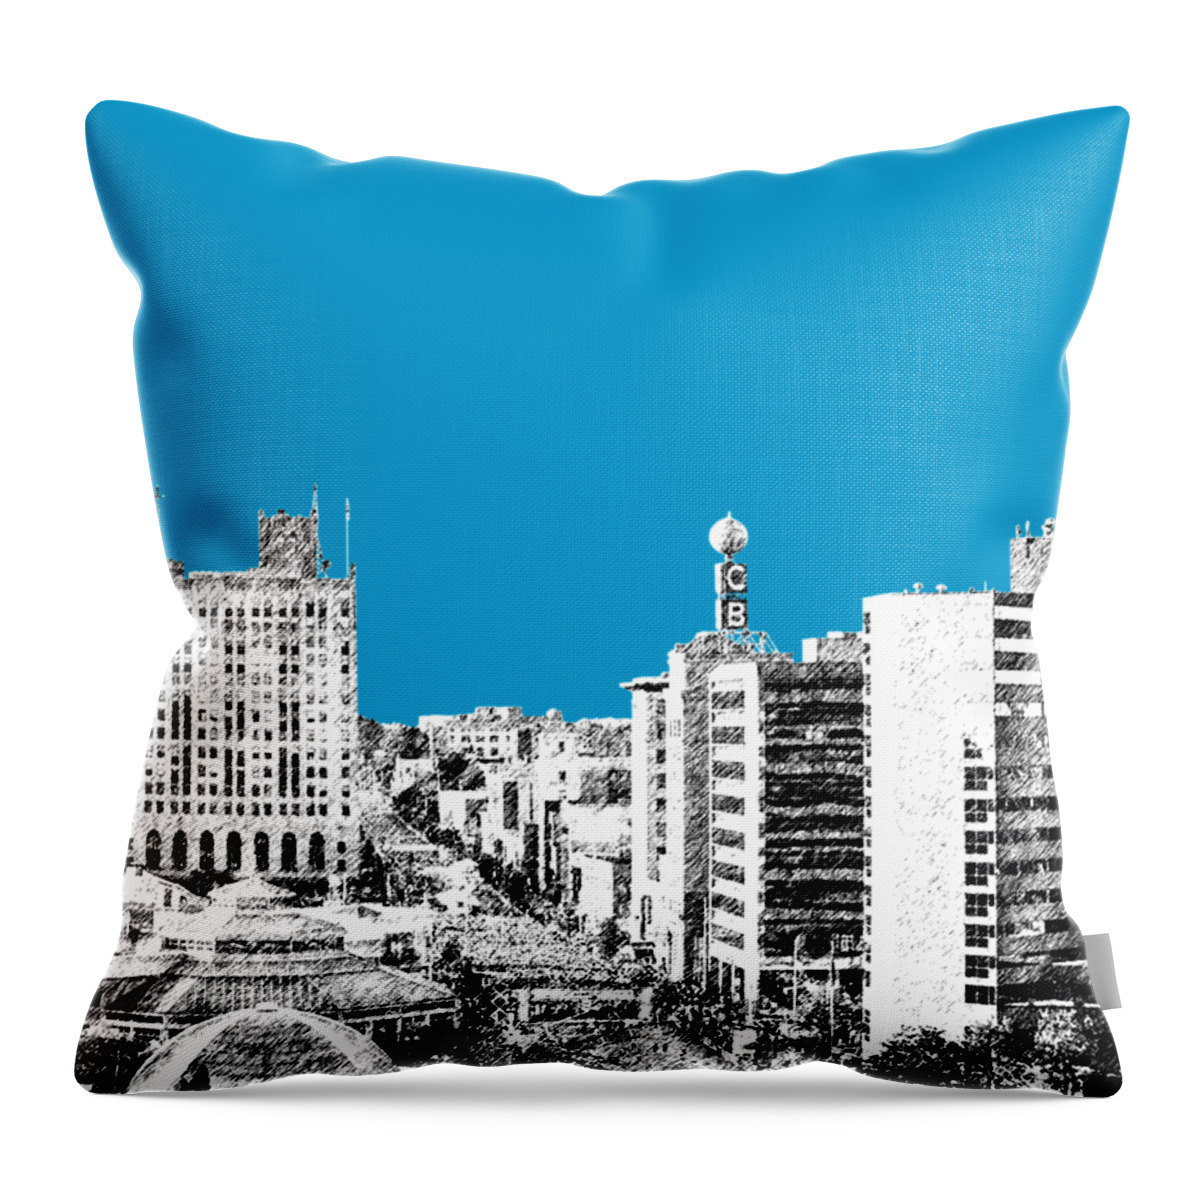 Architecture Throw Pillow featuring the digital art Flint Michigan Skyline - Aqua by DB Artist